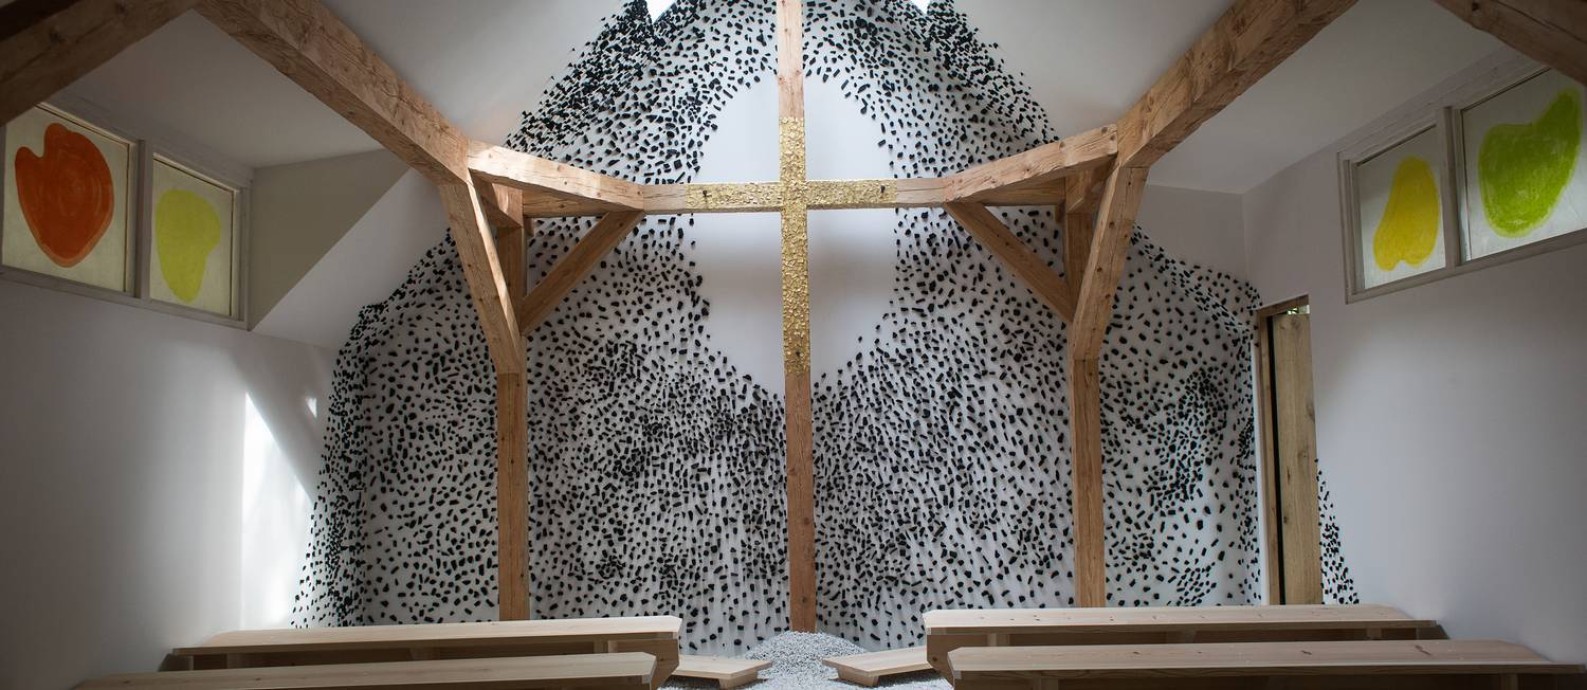 Capela criada pelo arquiteto japonês Terunobu Fujimori para a Bienal de Veneza Foto: NADIA SHIRA COHEN / NYT